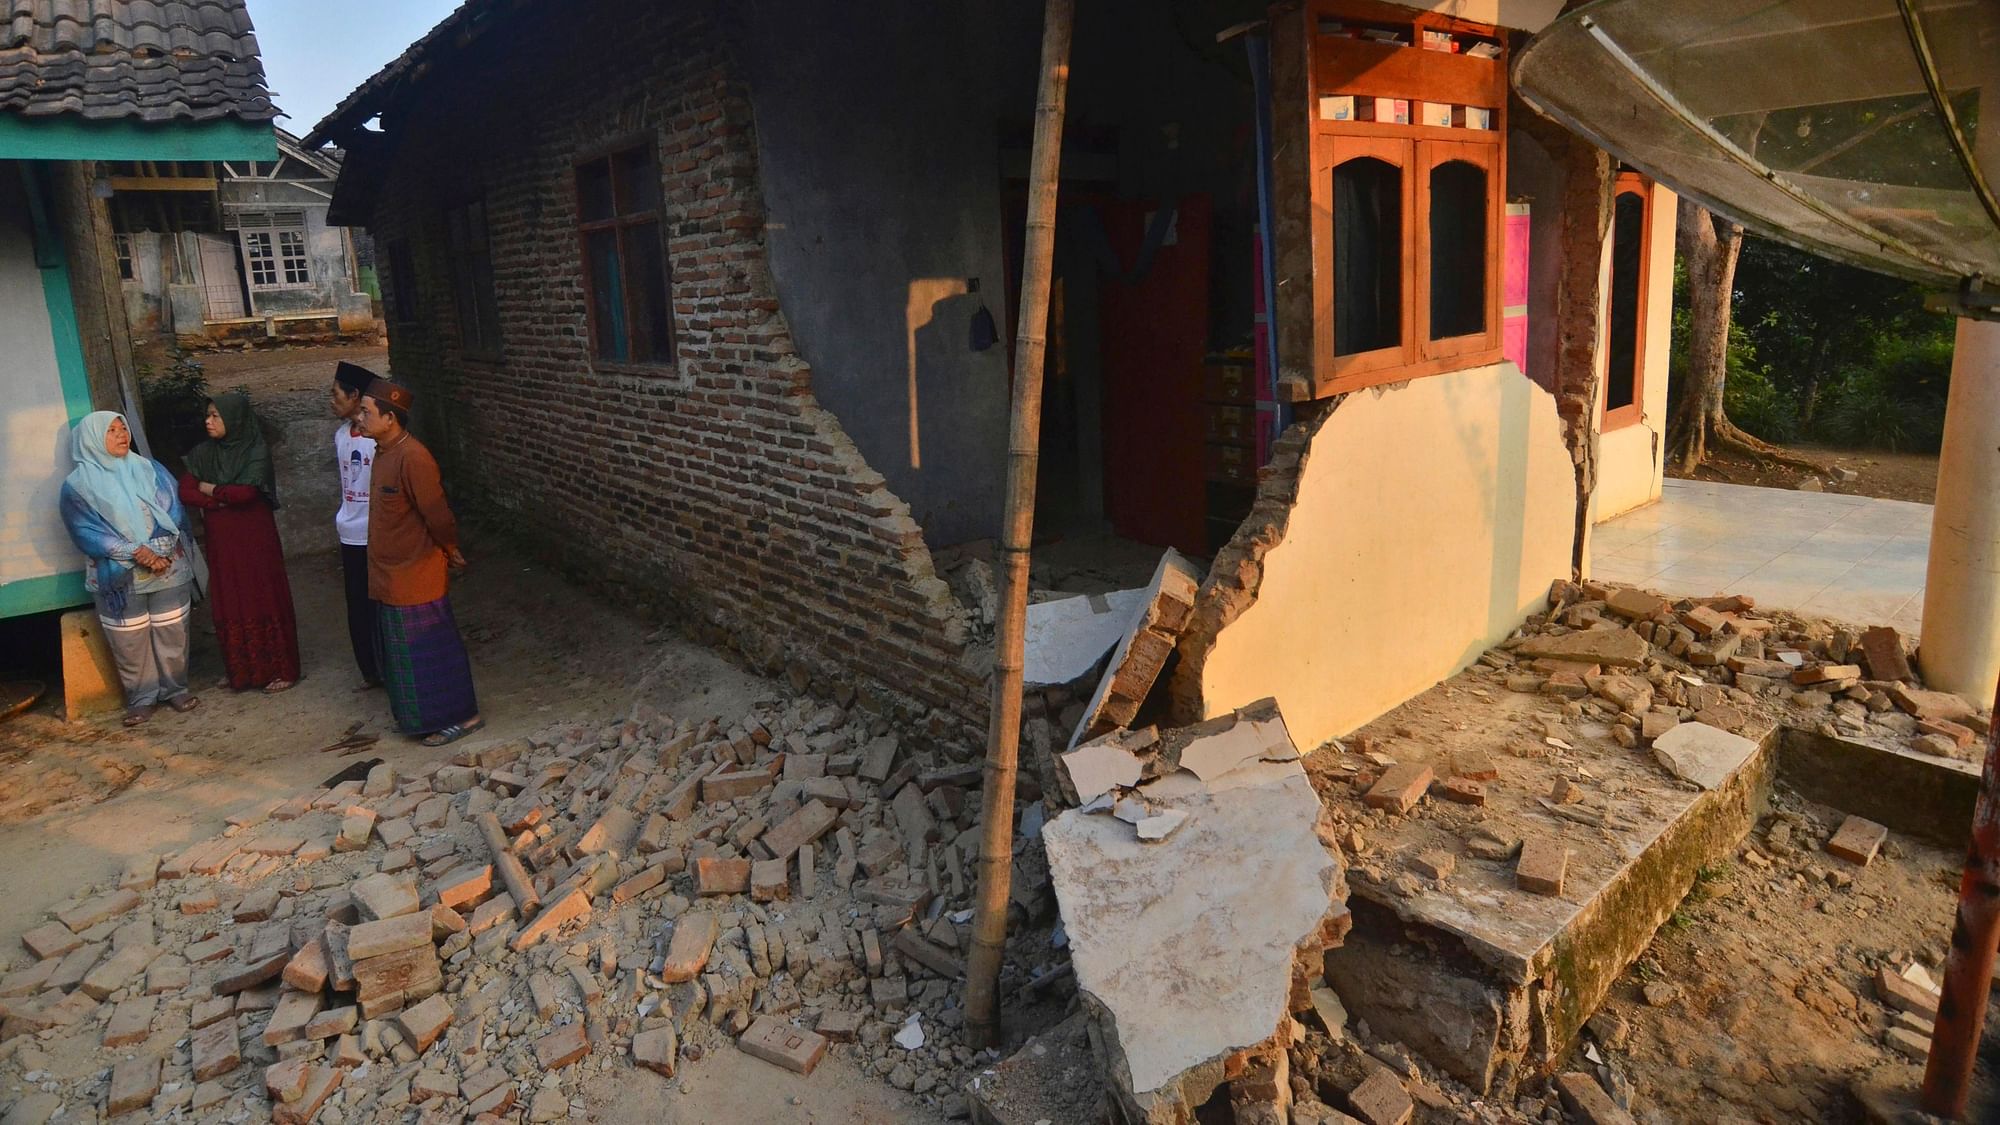 Residents talk near a house damaged in an earthquake in Mandalawangi, Banten province, Indonesia